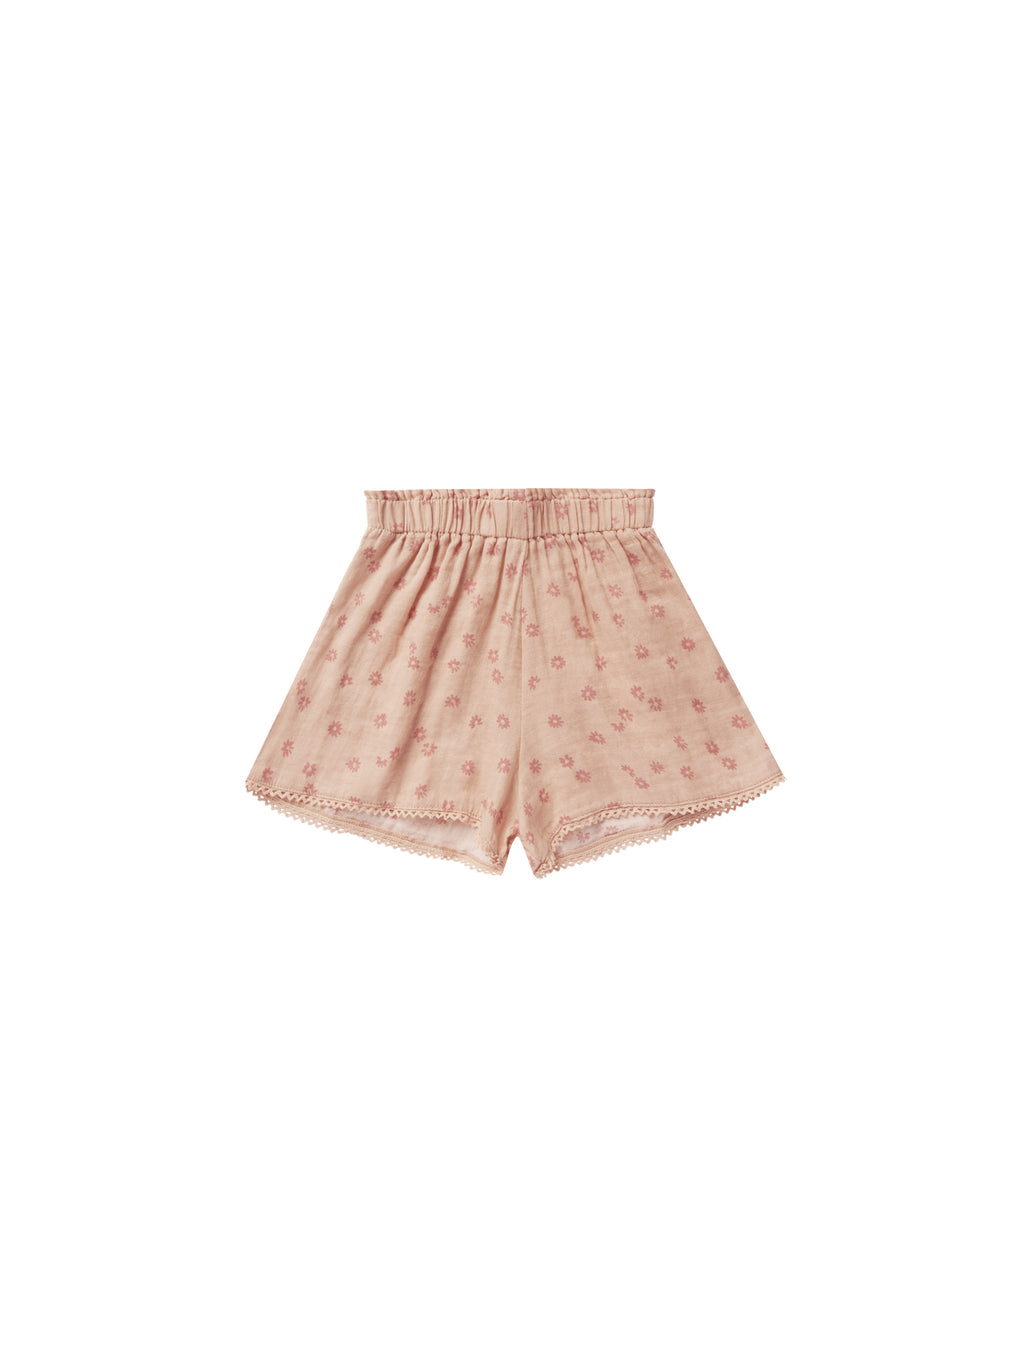 Rylee + Cru Remi Shorts - Pink Daisy